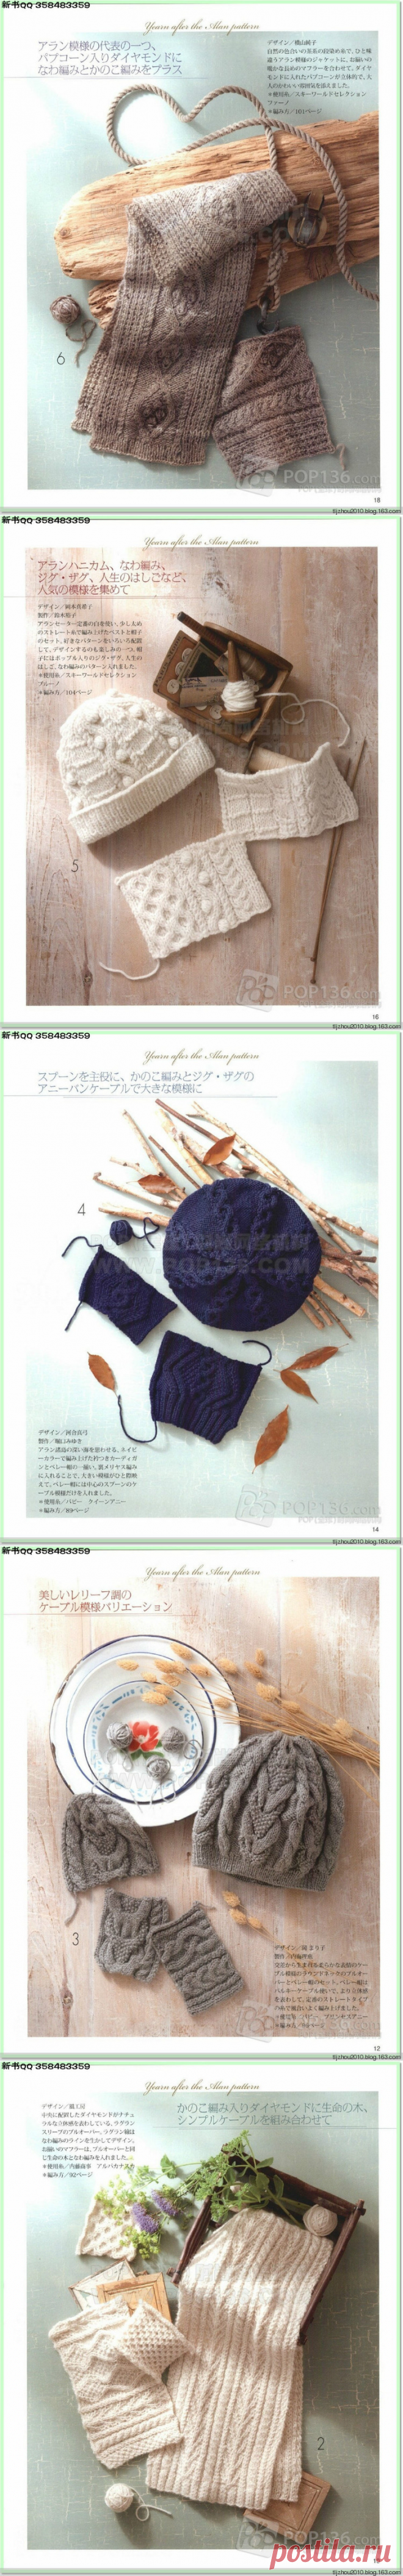 Журнал «let's knit series 80433»